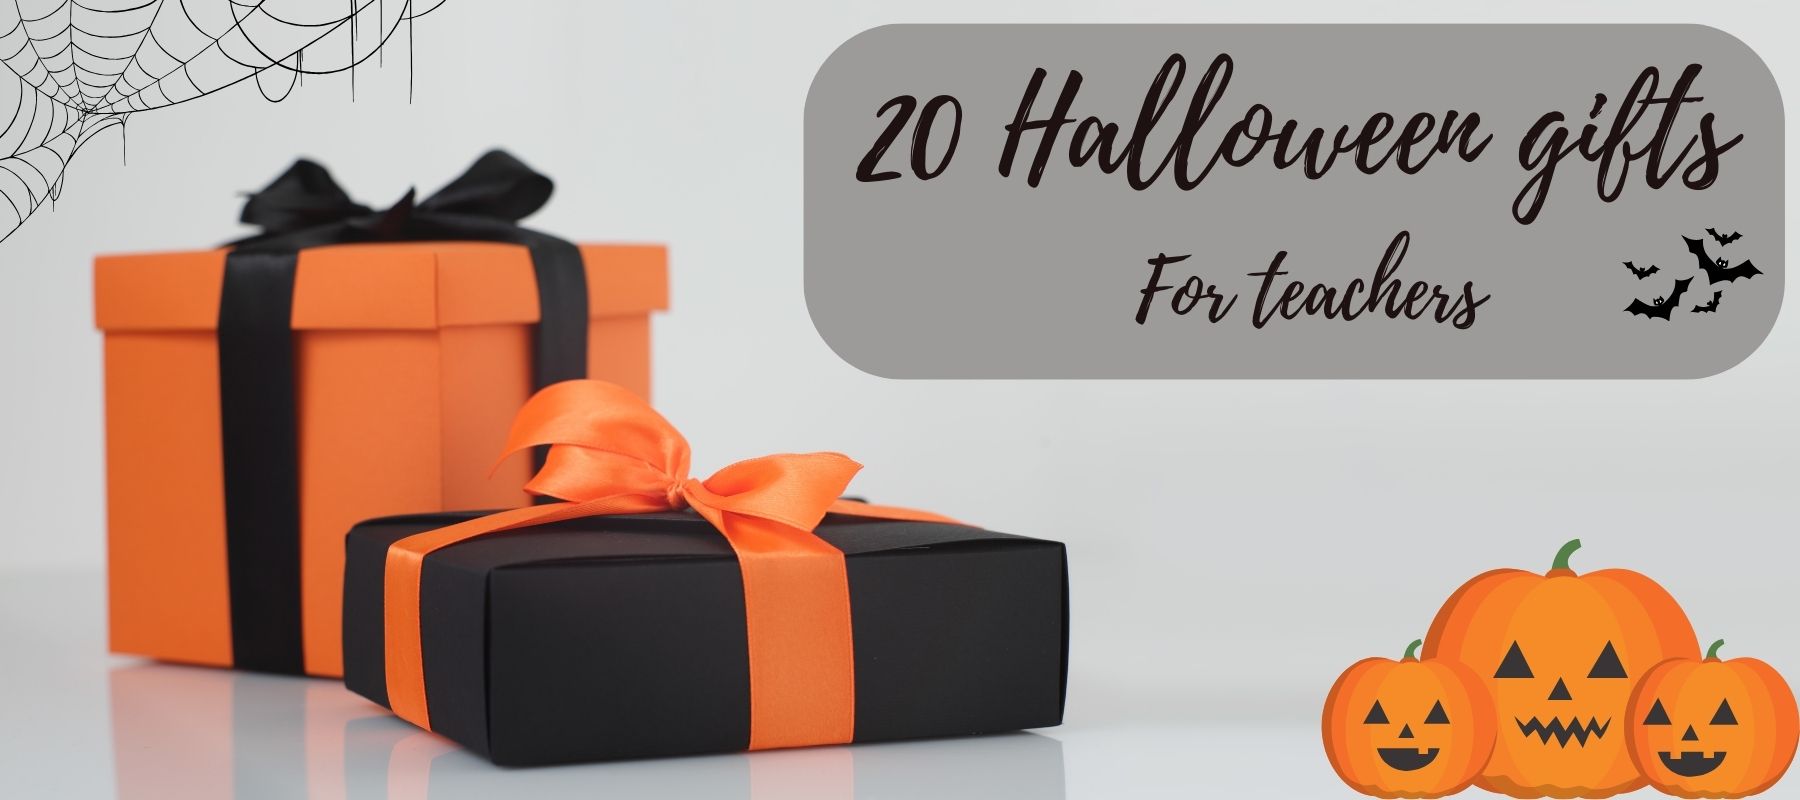 Halloween-gifts-for-teachers